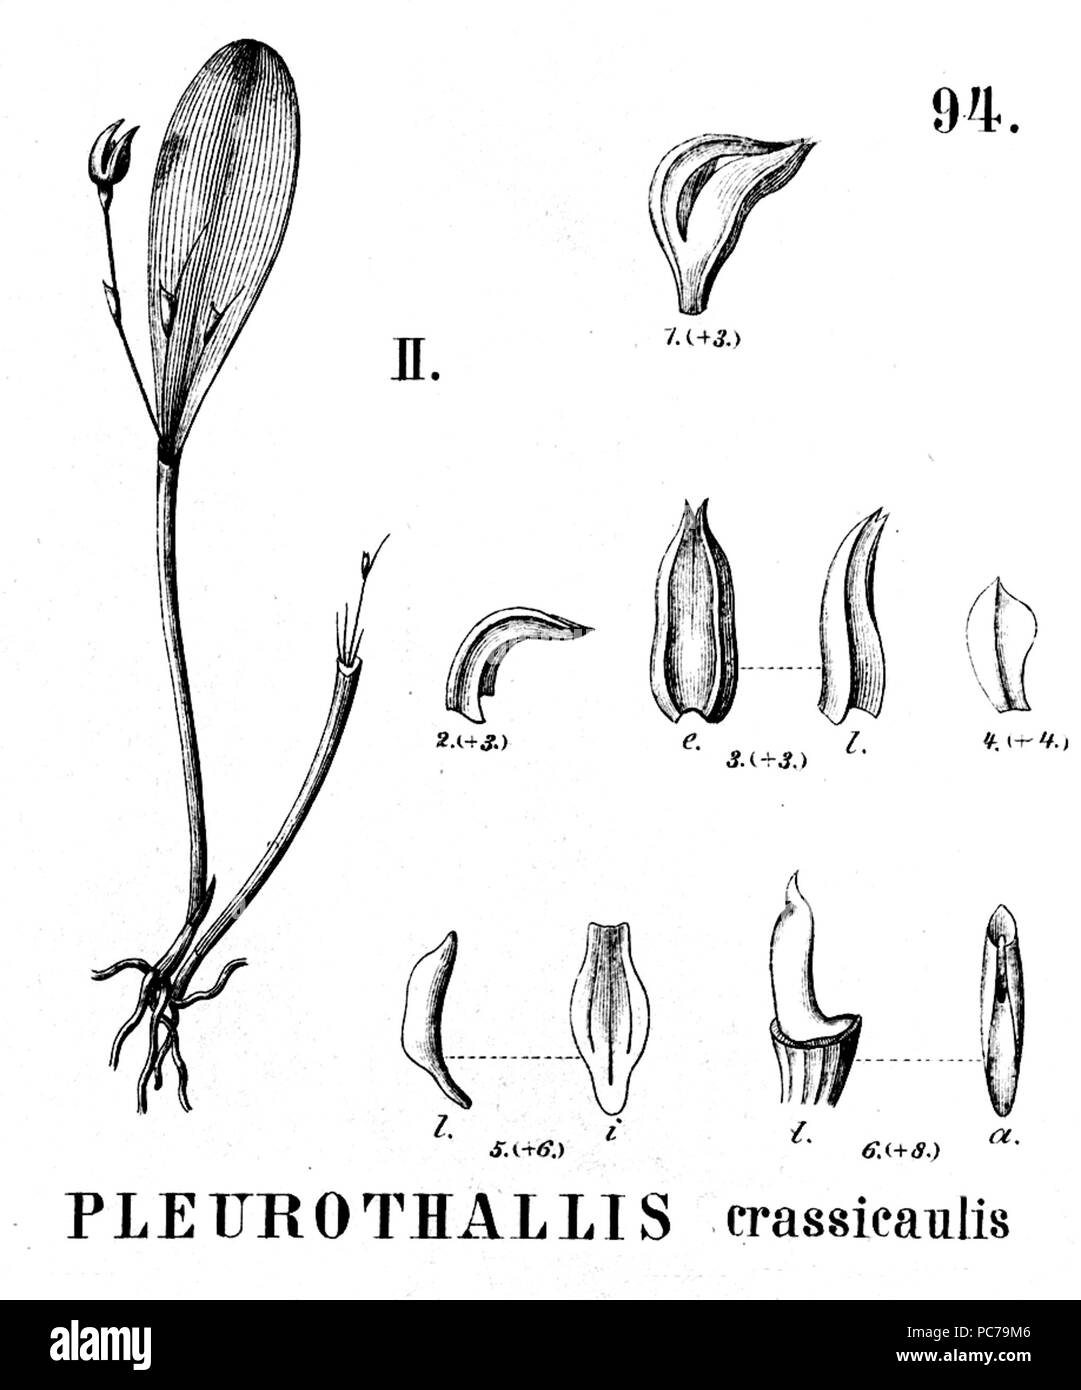 489 Pleurothallis crassicaulis - cutout from Flora Brasiliensis 3-4-94 fig II Stock Photo